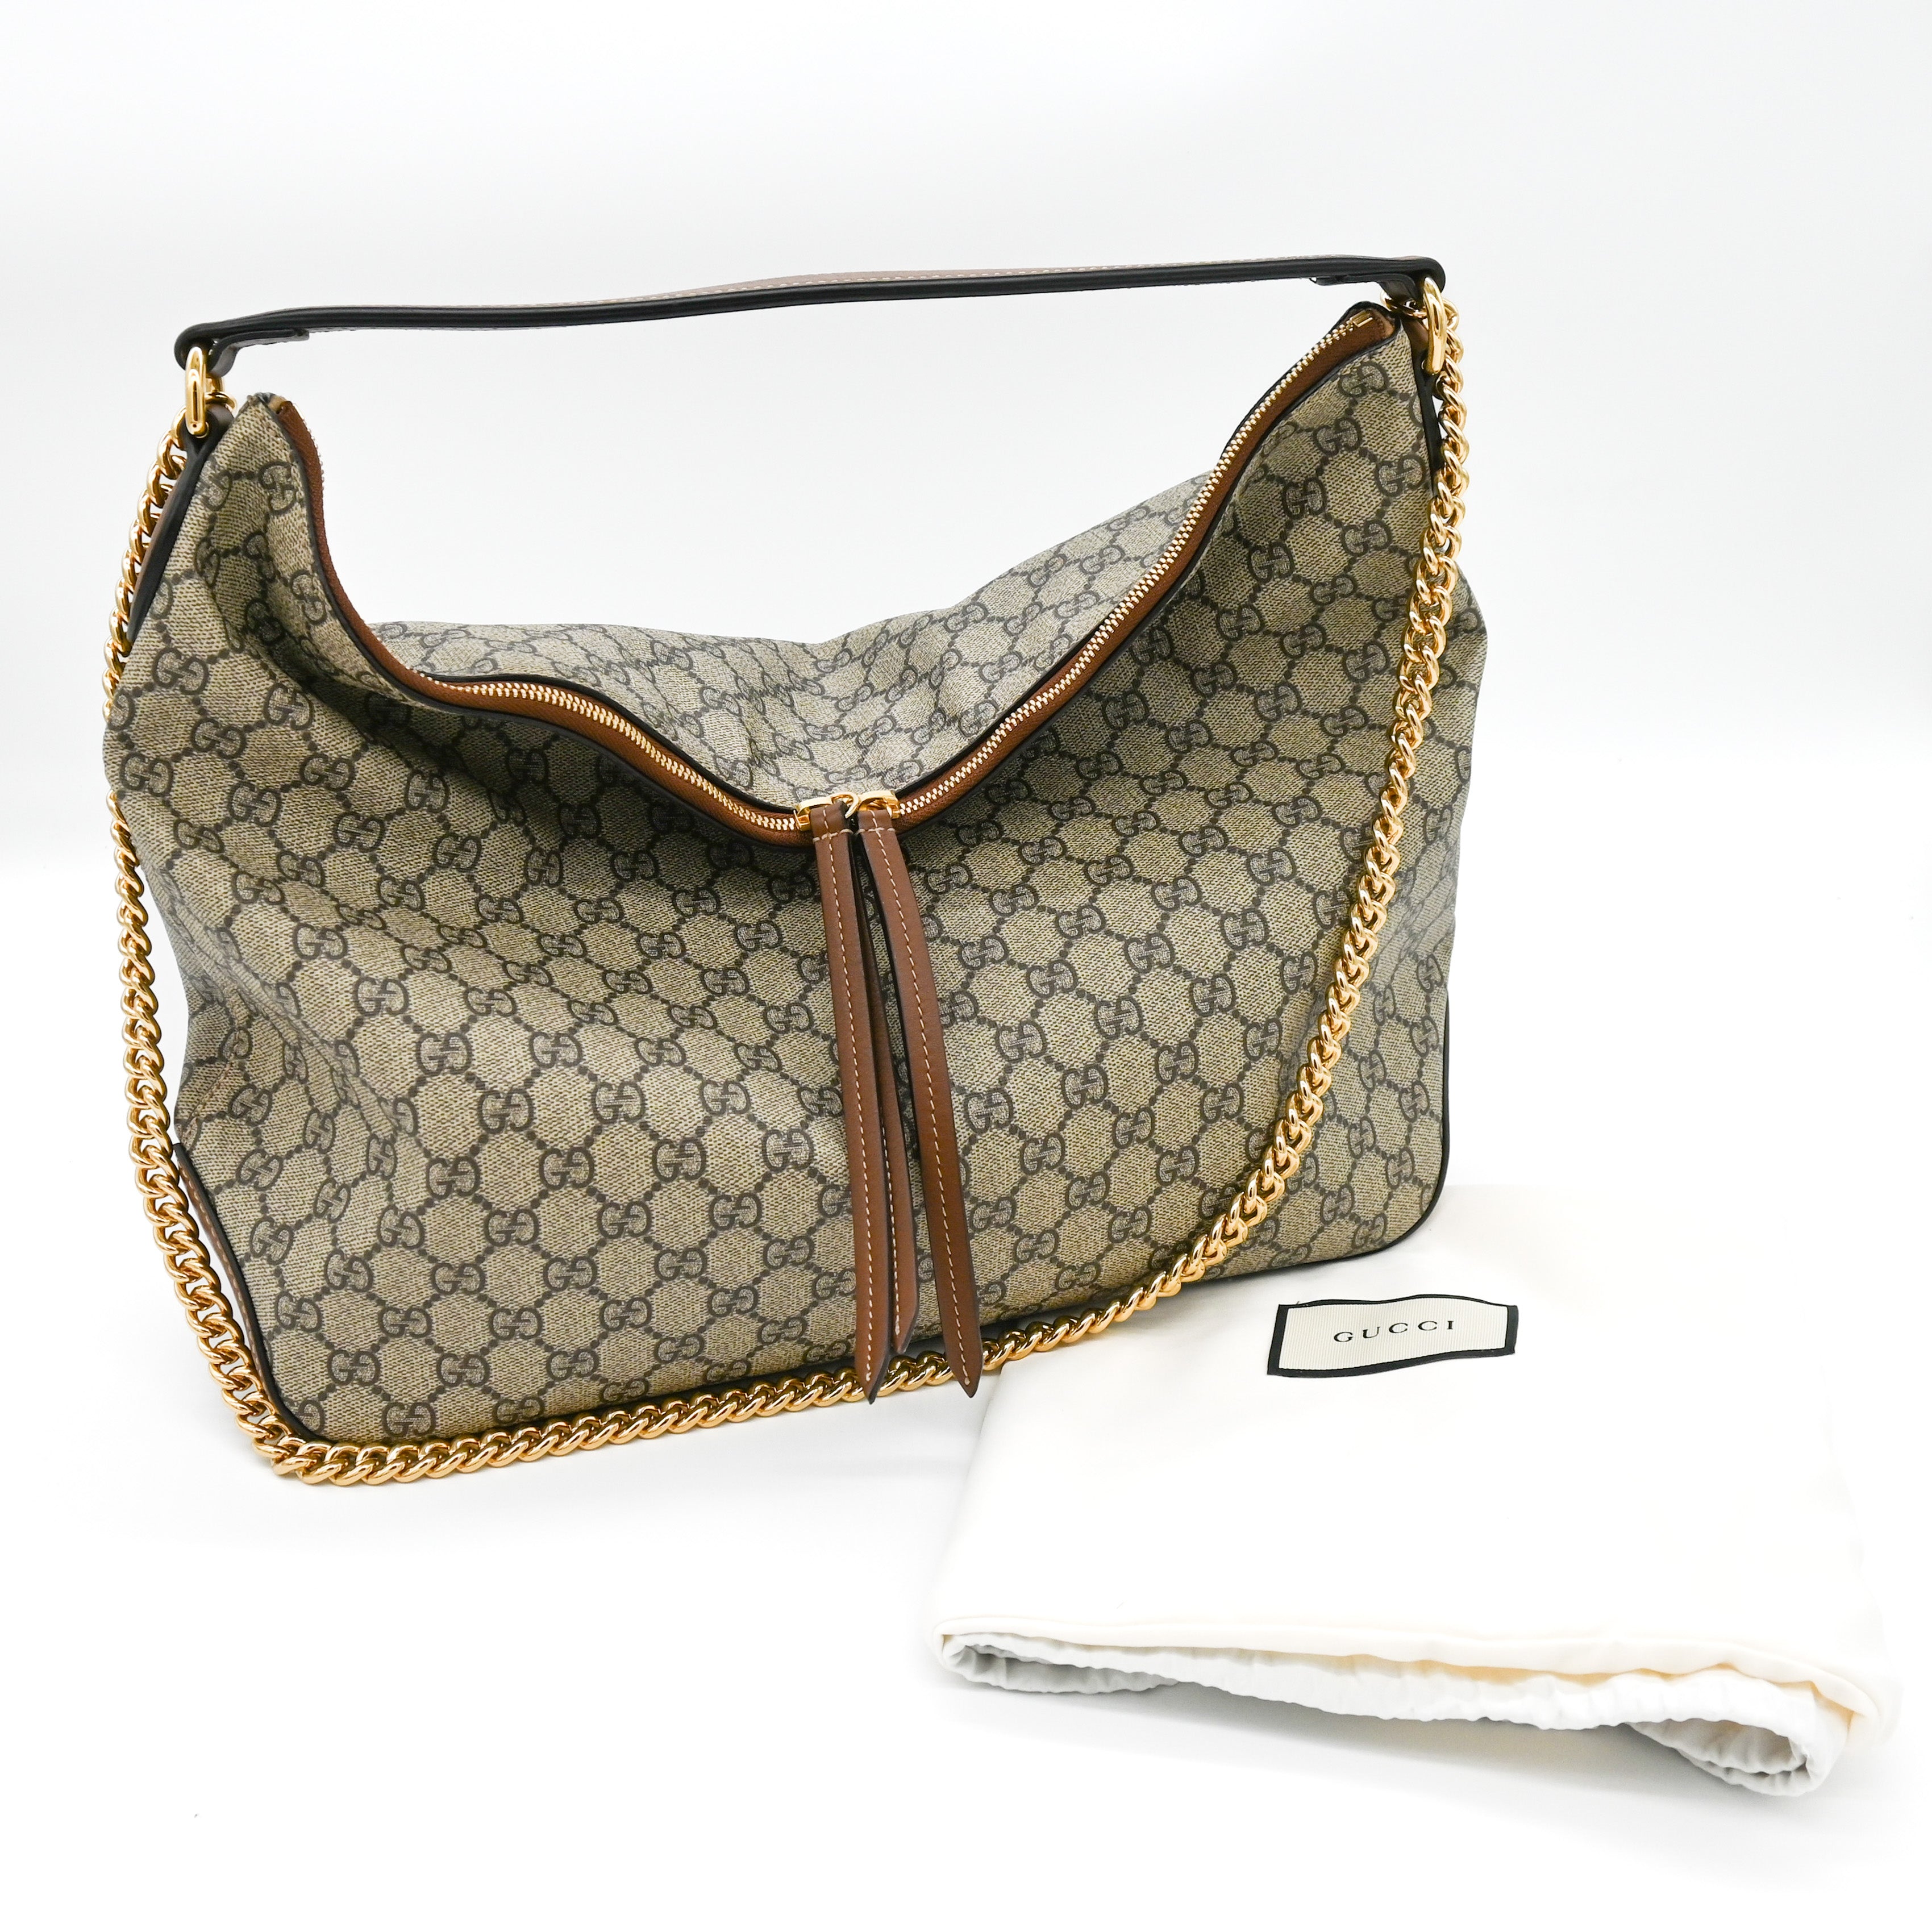 GUCCI Gucci Gg Supreme Chain Shoulder Bag - Vault 55